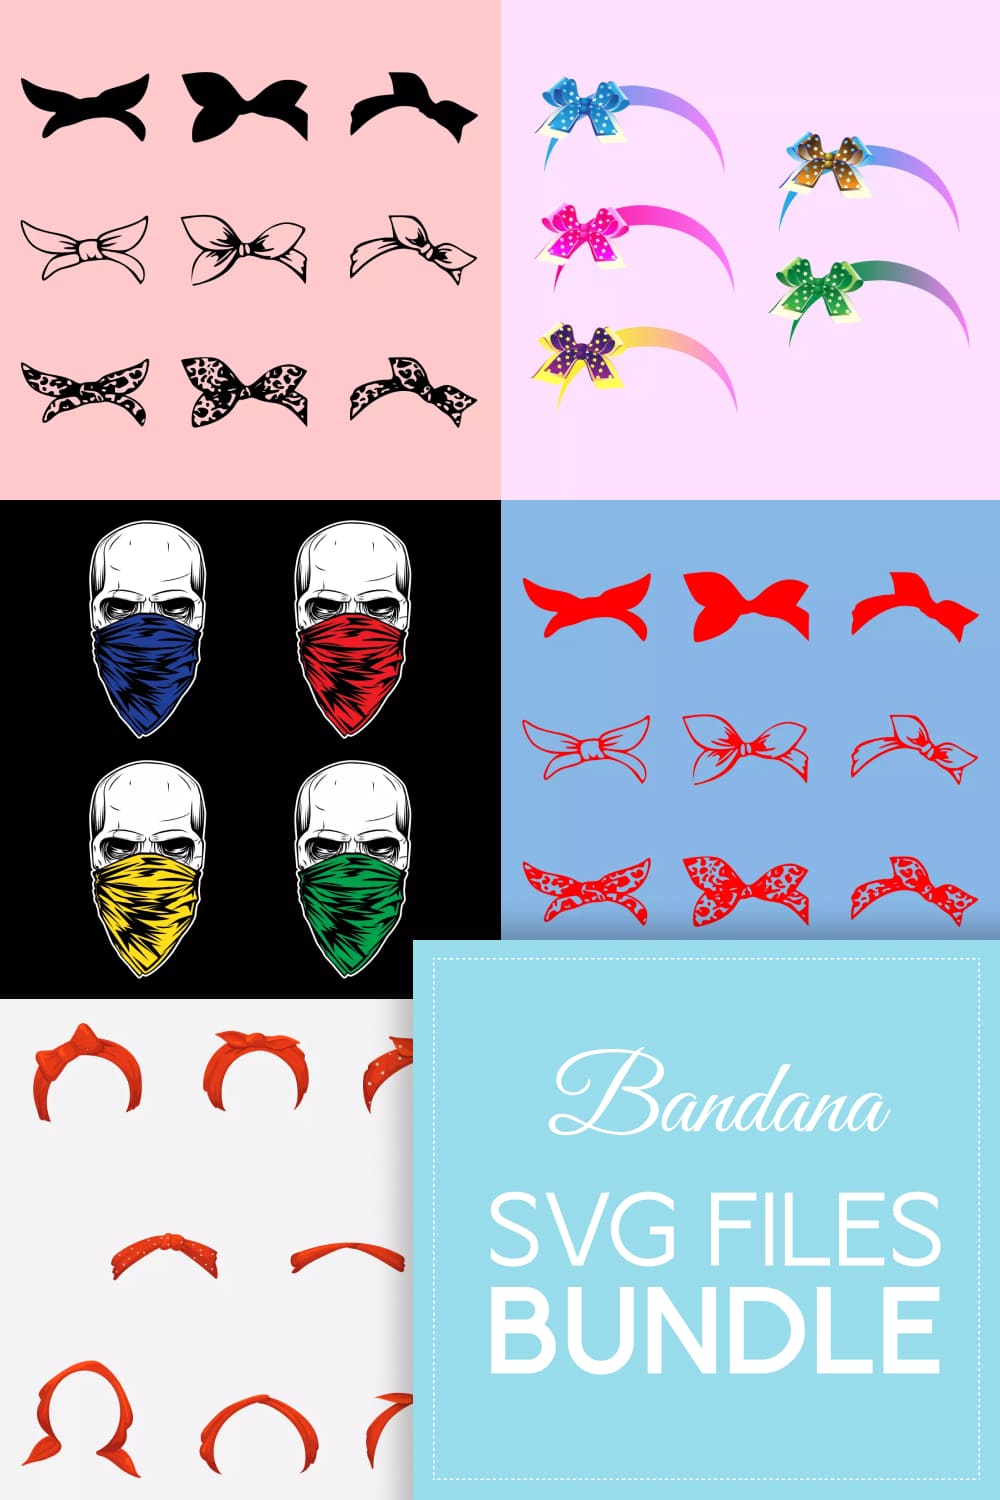 Bandana SVG files bundle, picture for pinterest 1000x1500.